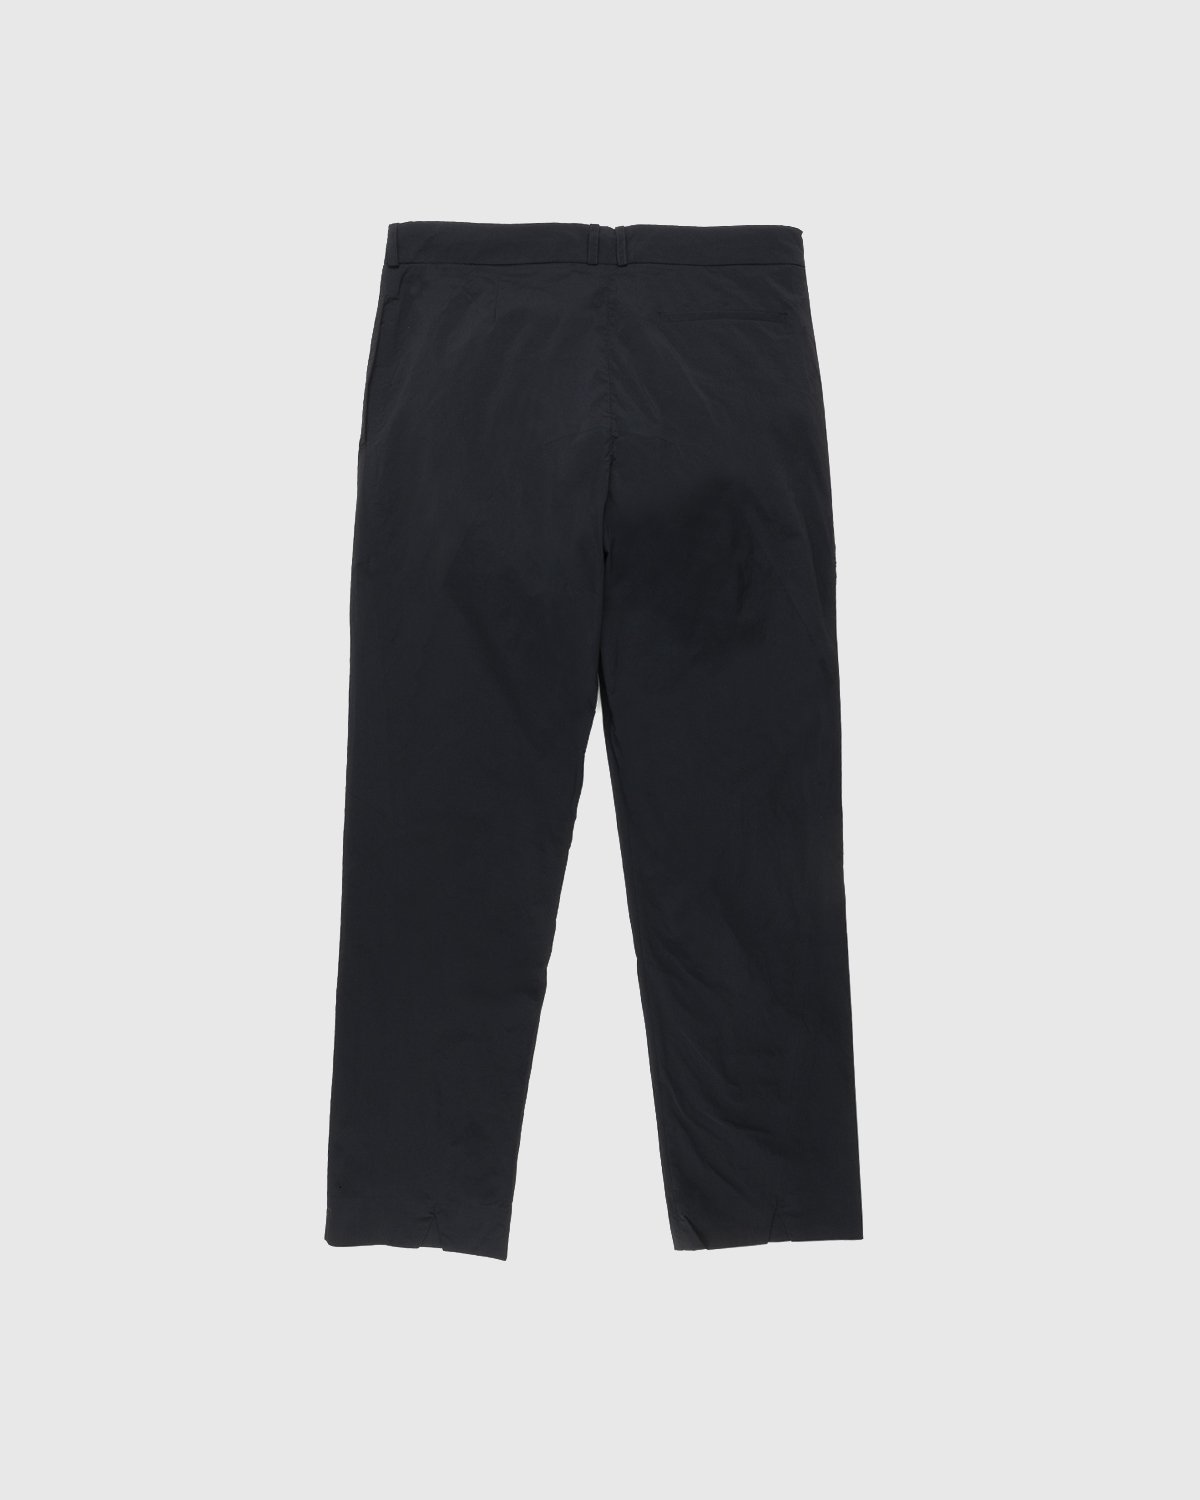 A-Cold-Wall* - Stealth Nylon Pants Black - Clothing - Black - Image 2